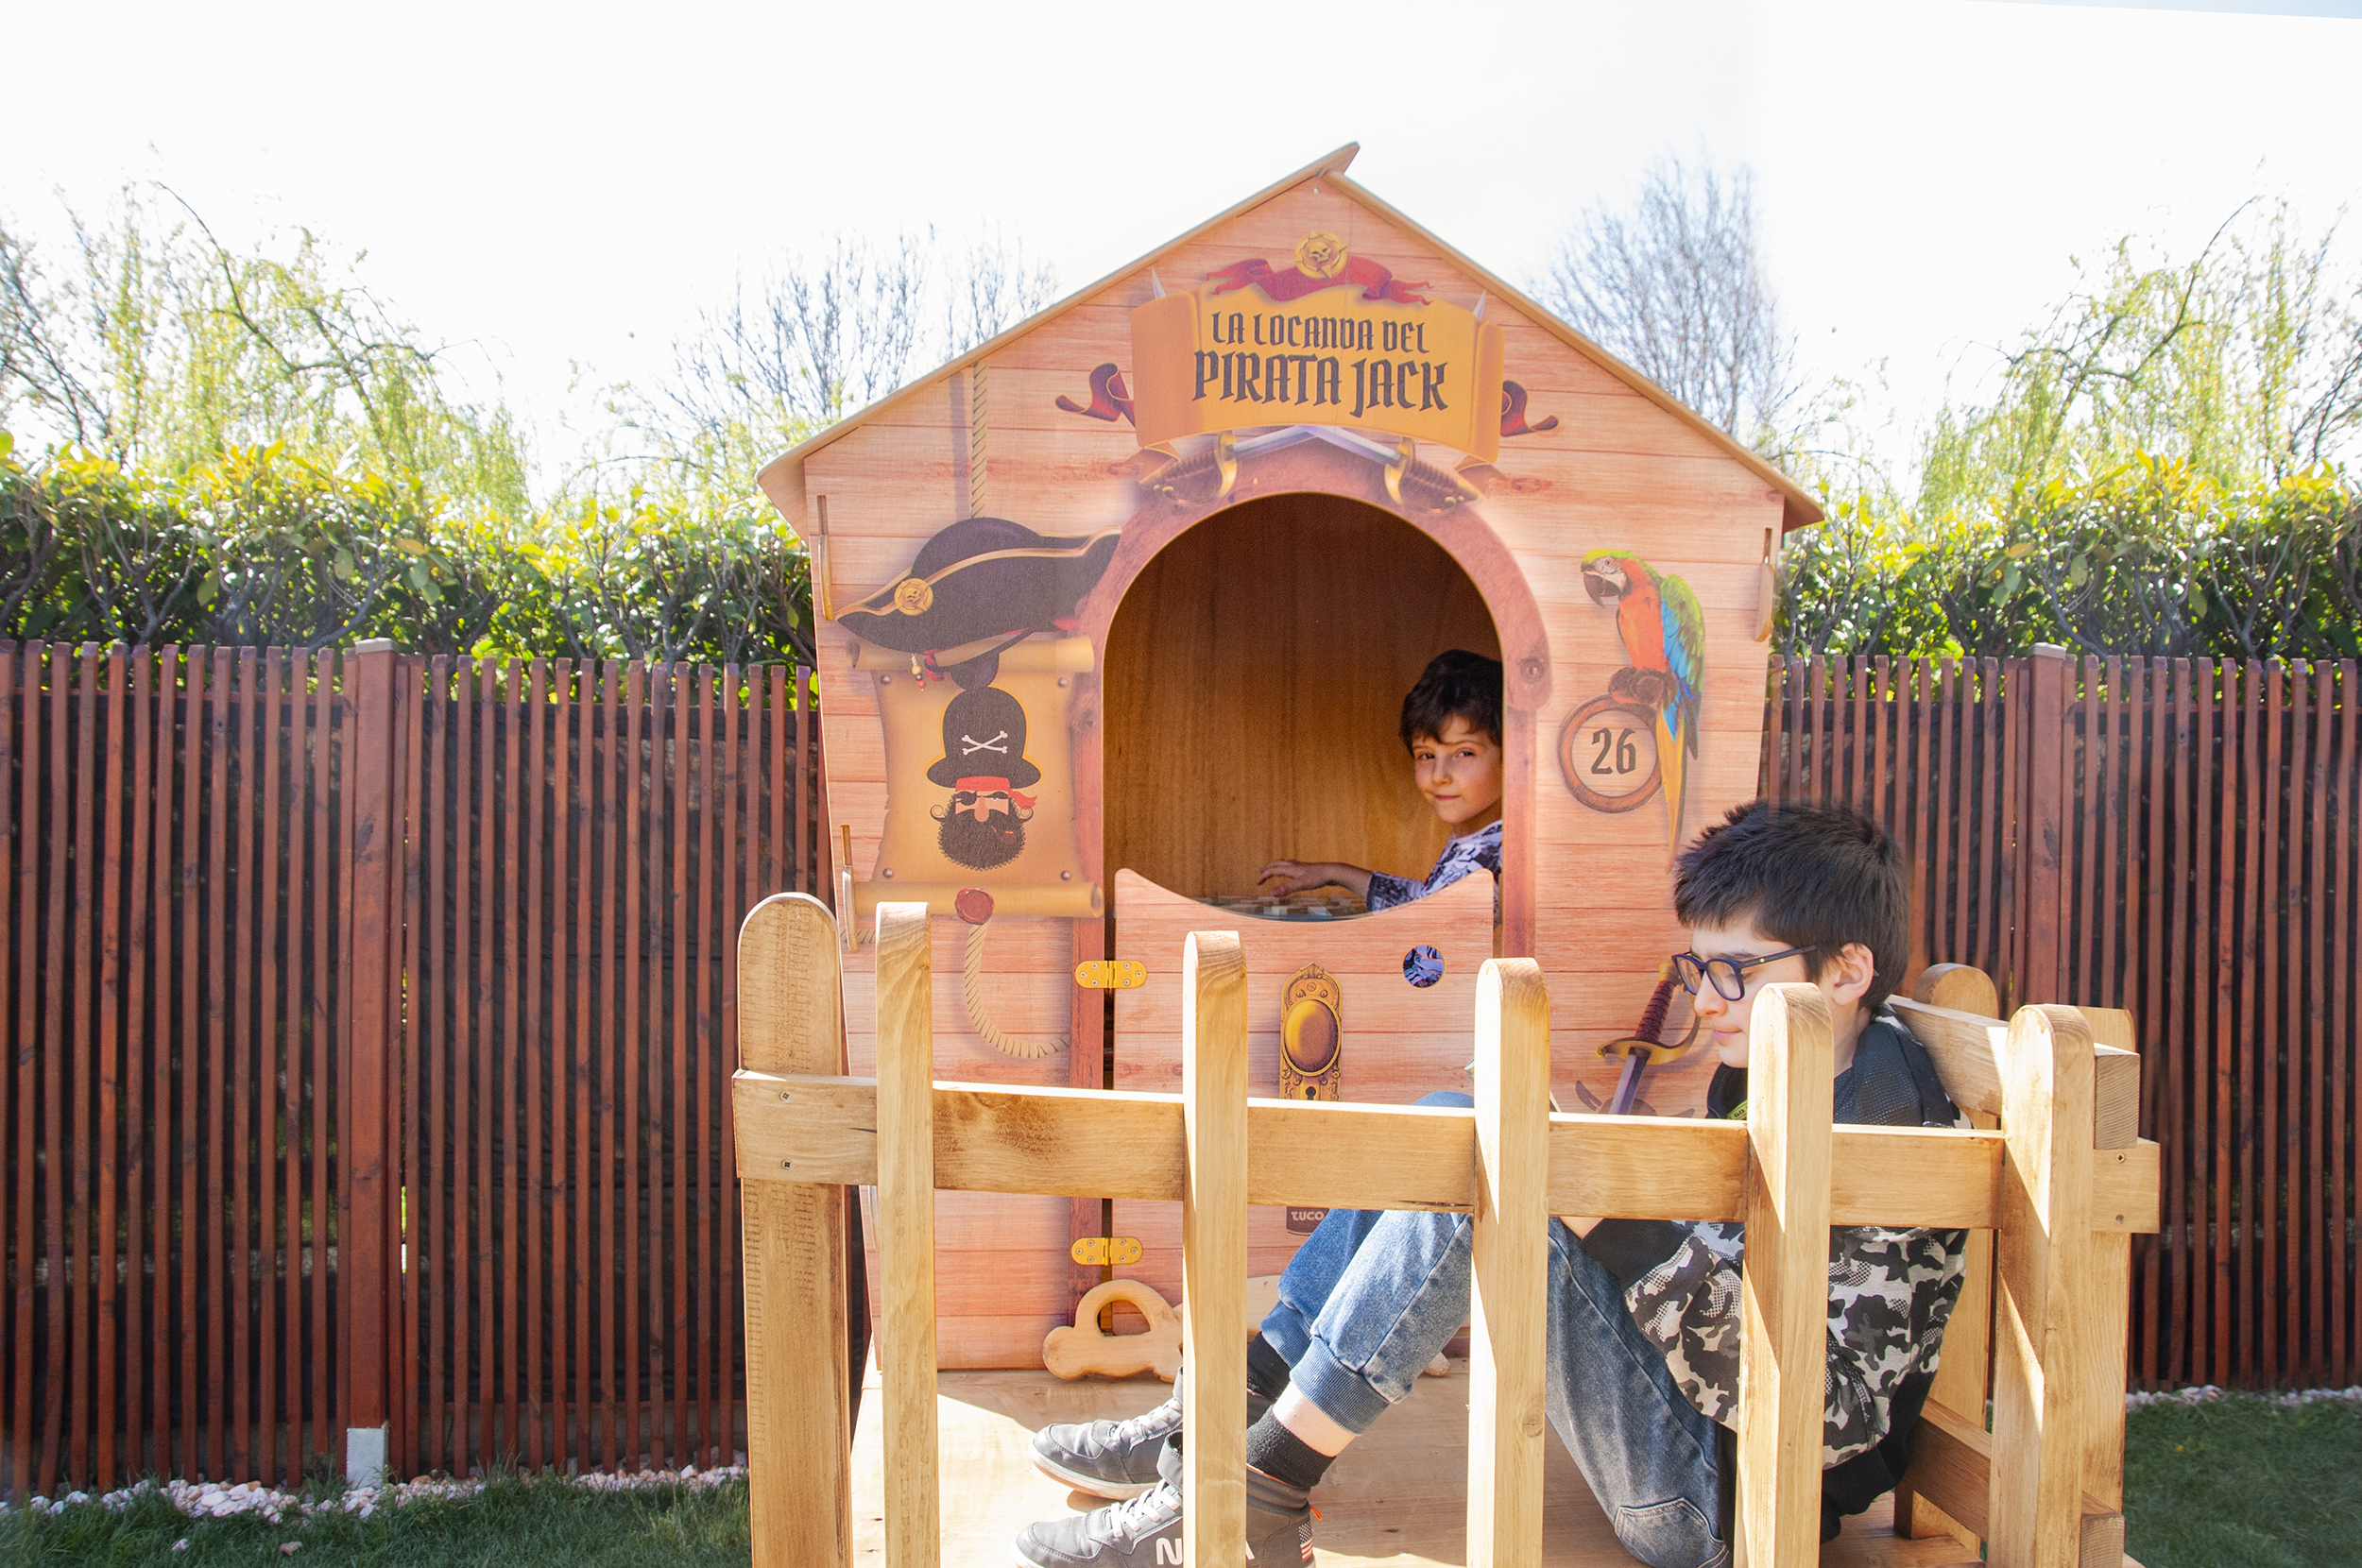 casetta palafitta in legno per bambini a tema pirati